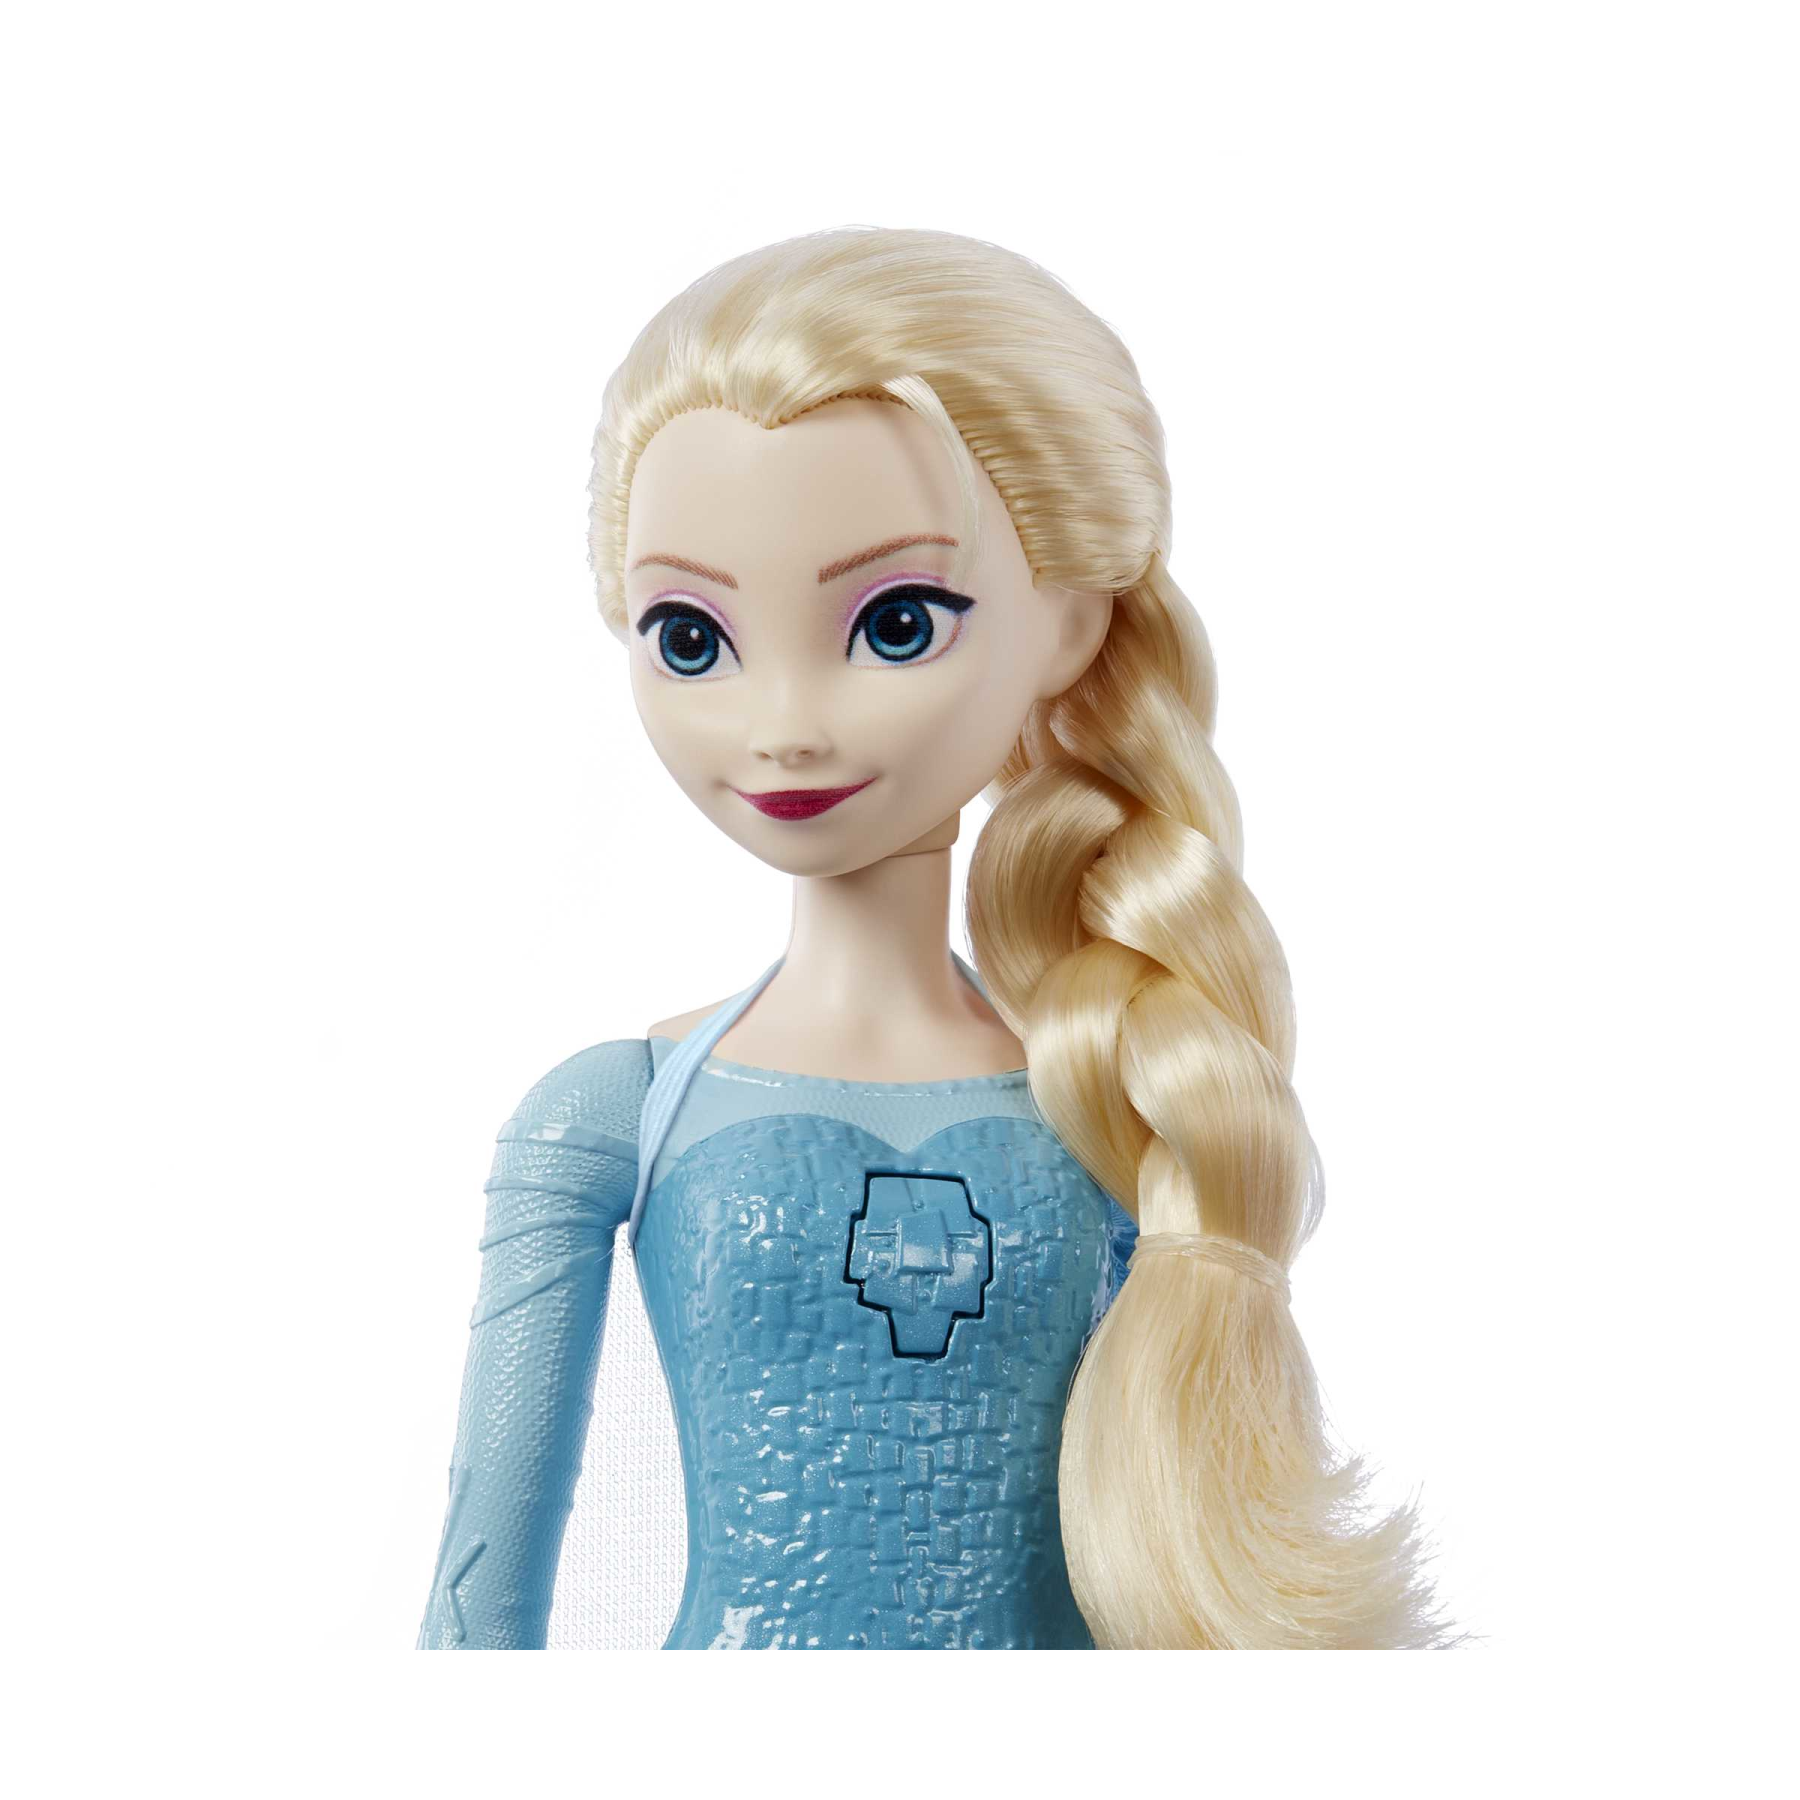 Disney frozen - elsa all'alba sorgerò, bambola con look esclusivo, canta “all'alba sorgerò” dal film disney frozen, giocattolo per bambini, 3+ anni, hmg33 - DISNEY PRINCESS, Frozen